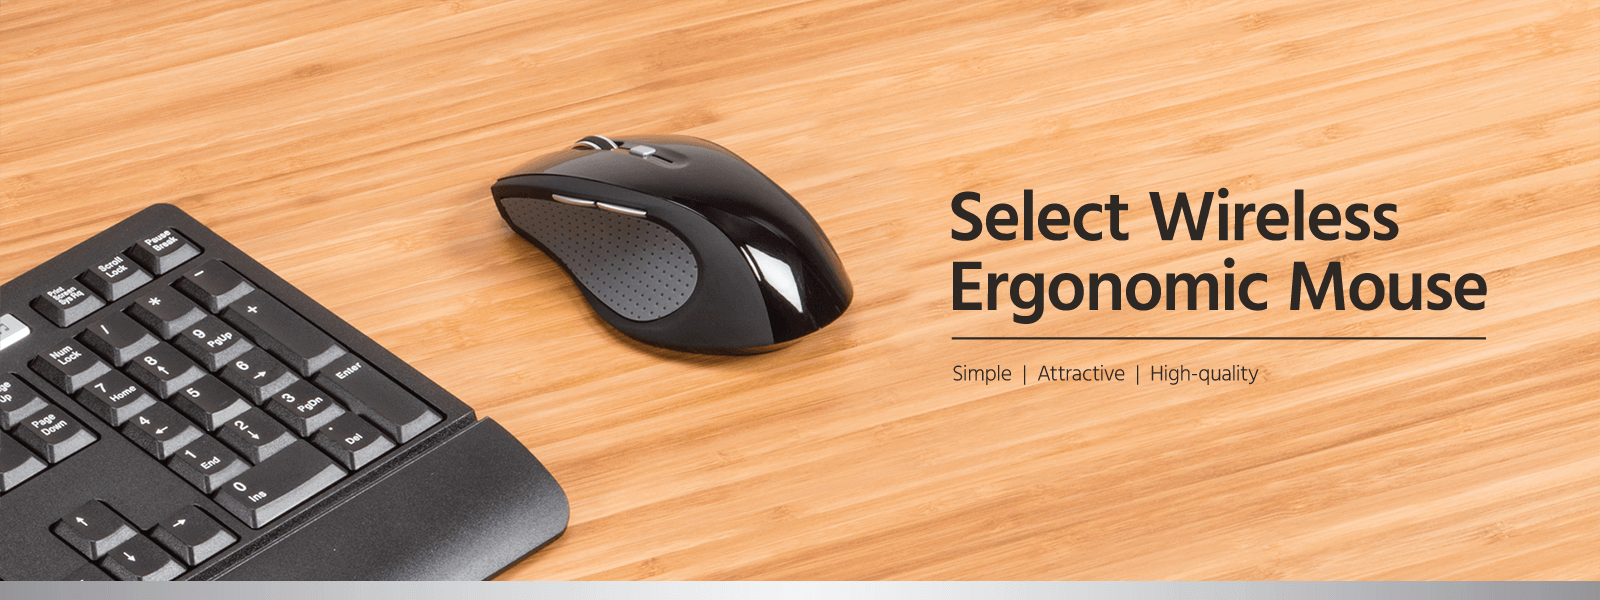 Select Wireless Ergonomic Mouse